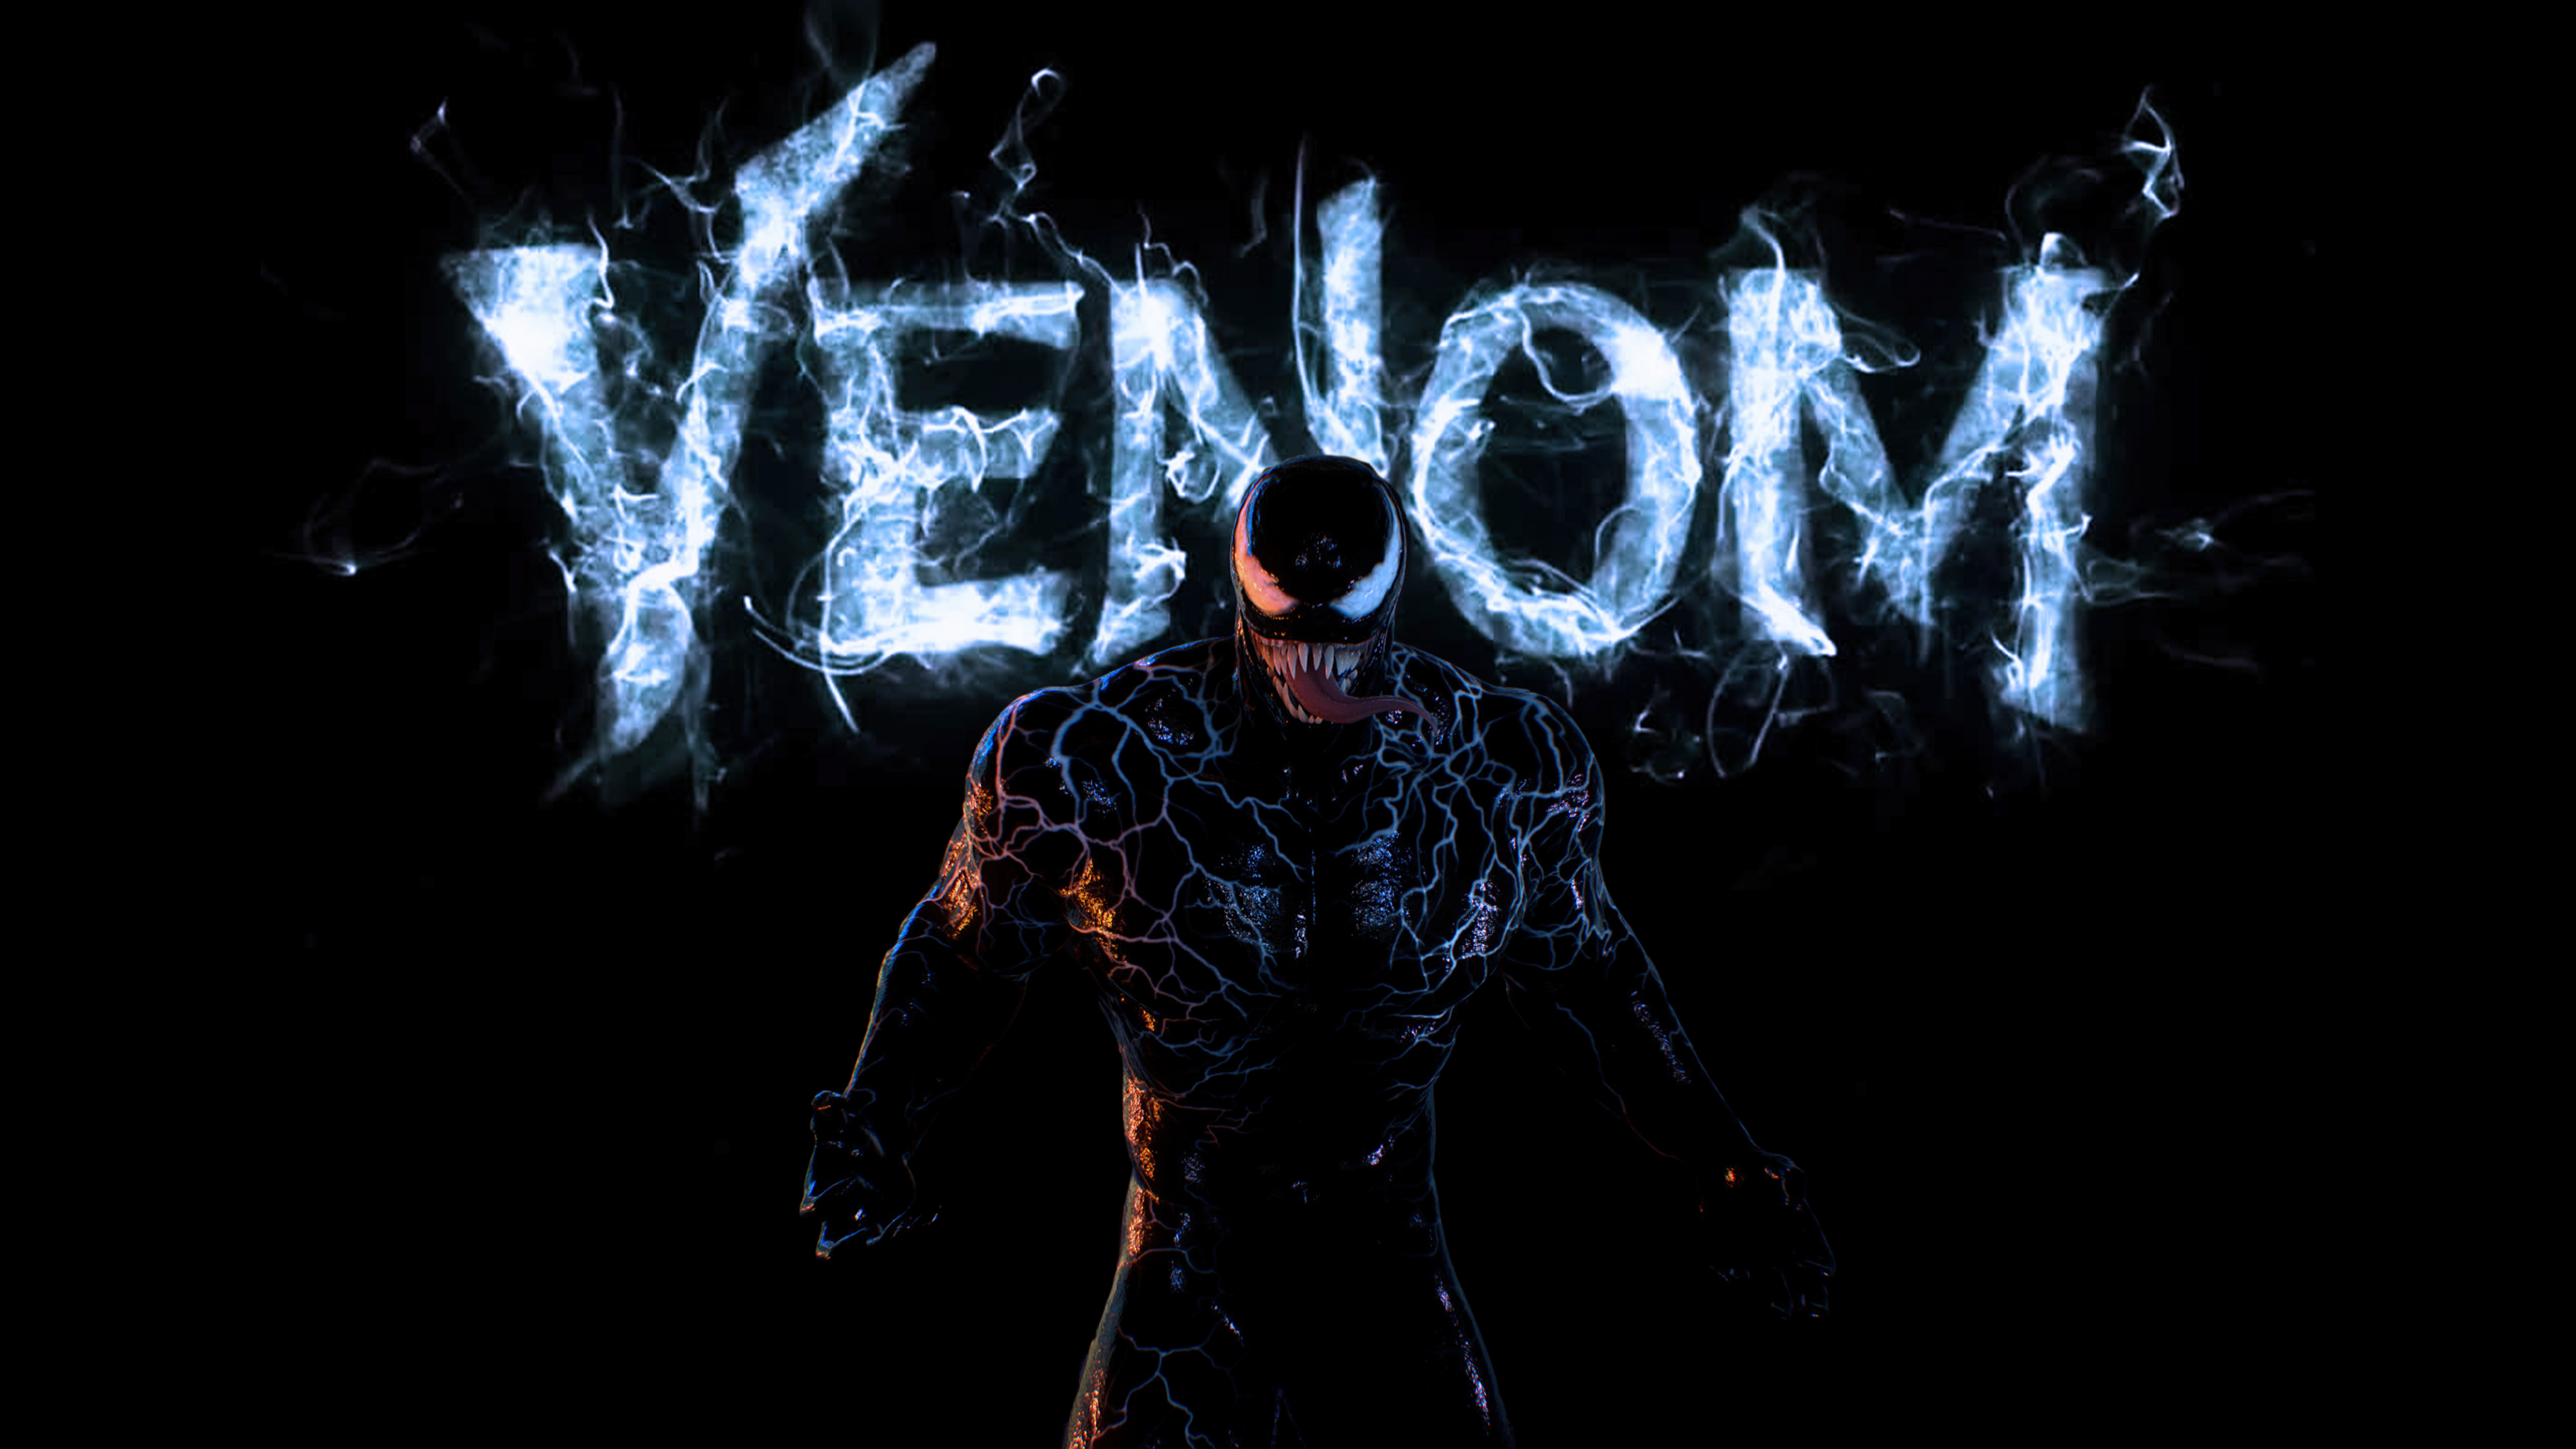 100+] Venom Movie Background s | Wallpapers.com